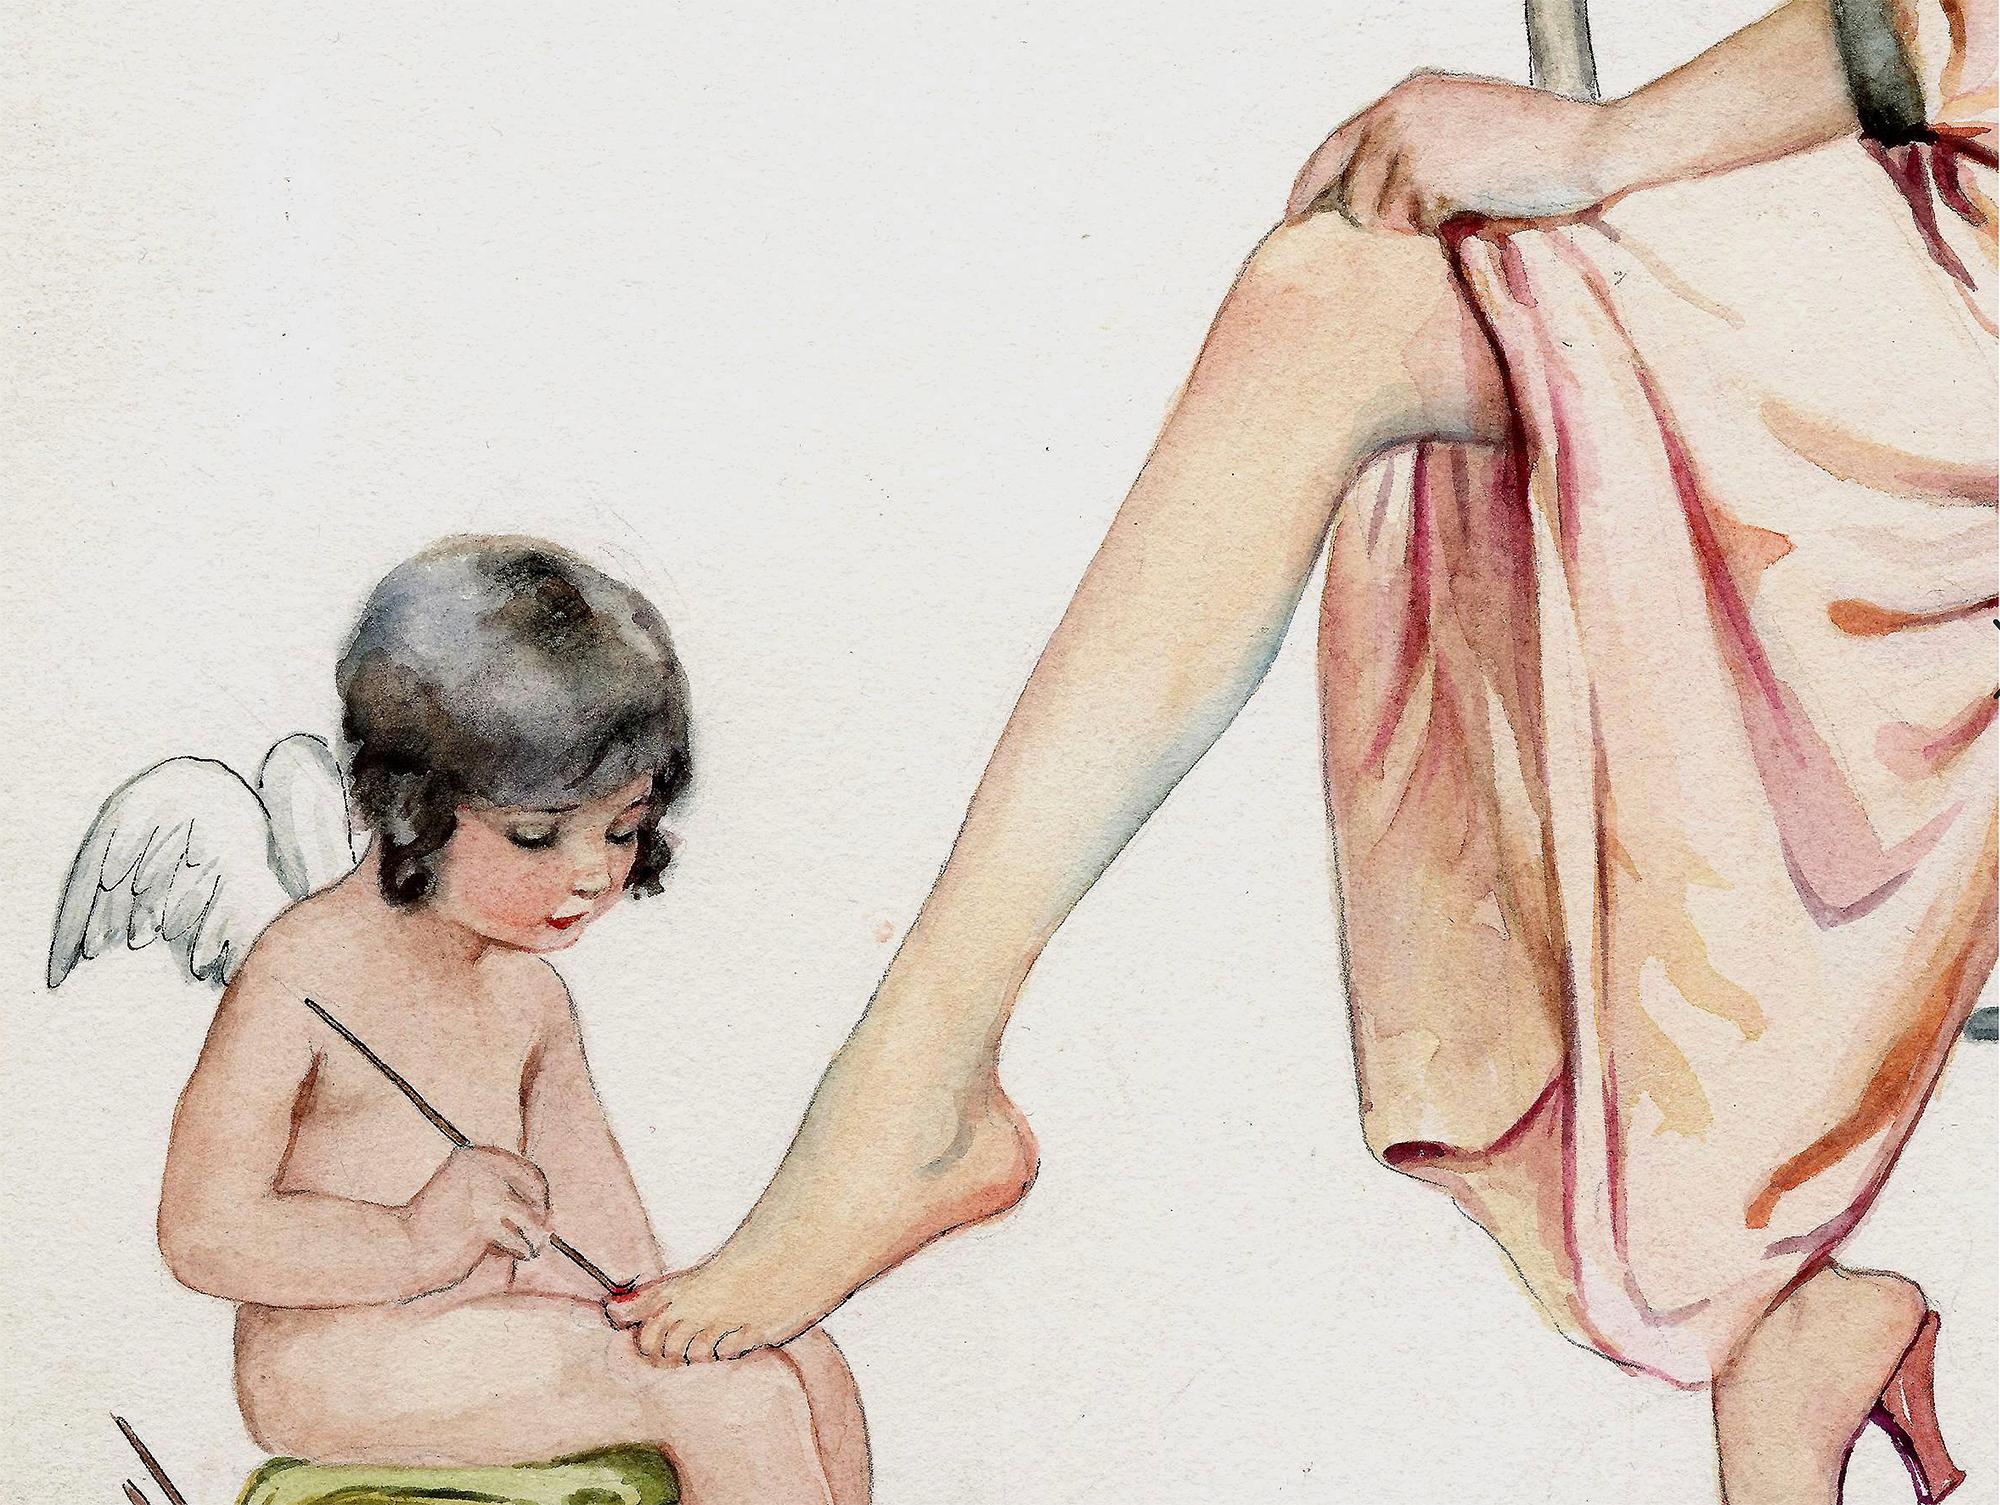  Risque Pedicure von Angel,   Les Ongles, Boudoir-Stil, weibliche Illustration (Art nouveau), Art, von Suzanne Meunier